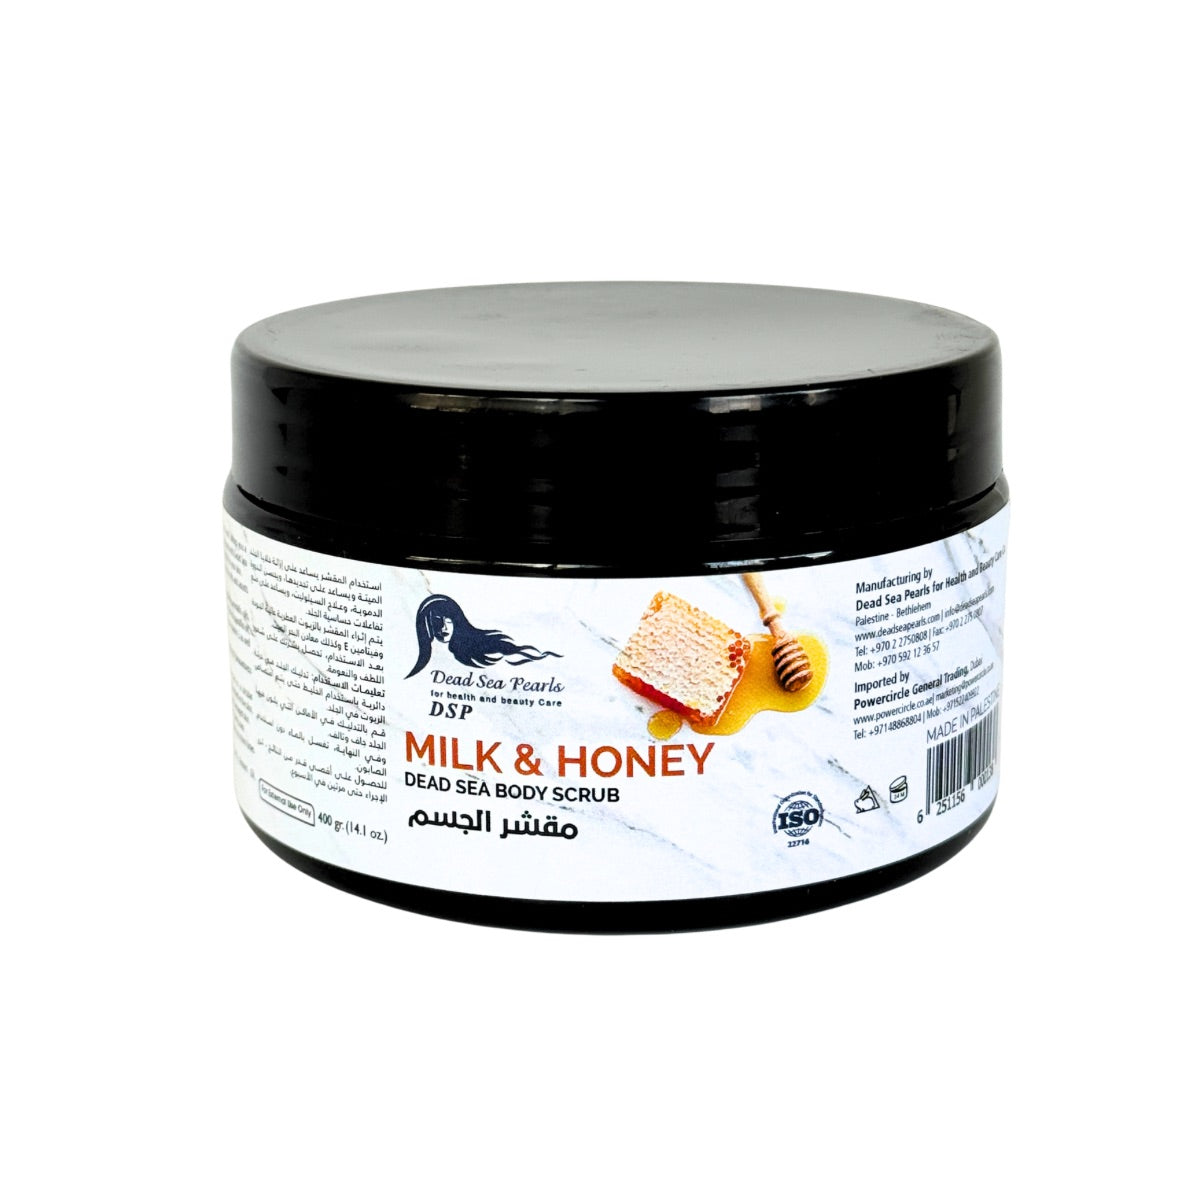 Dead Sea Body Scrub: Milk & Honey